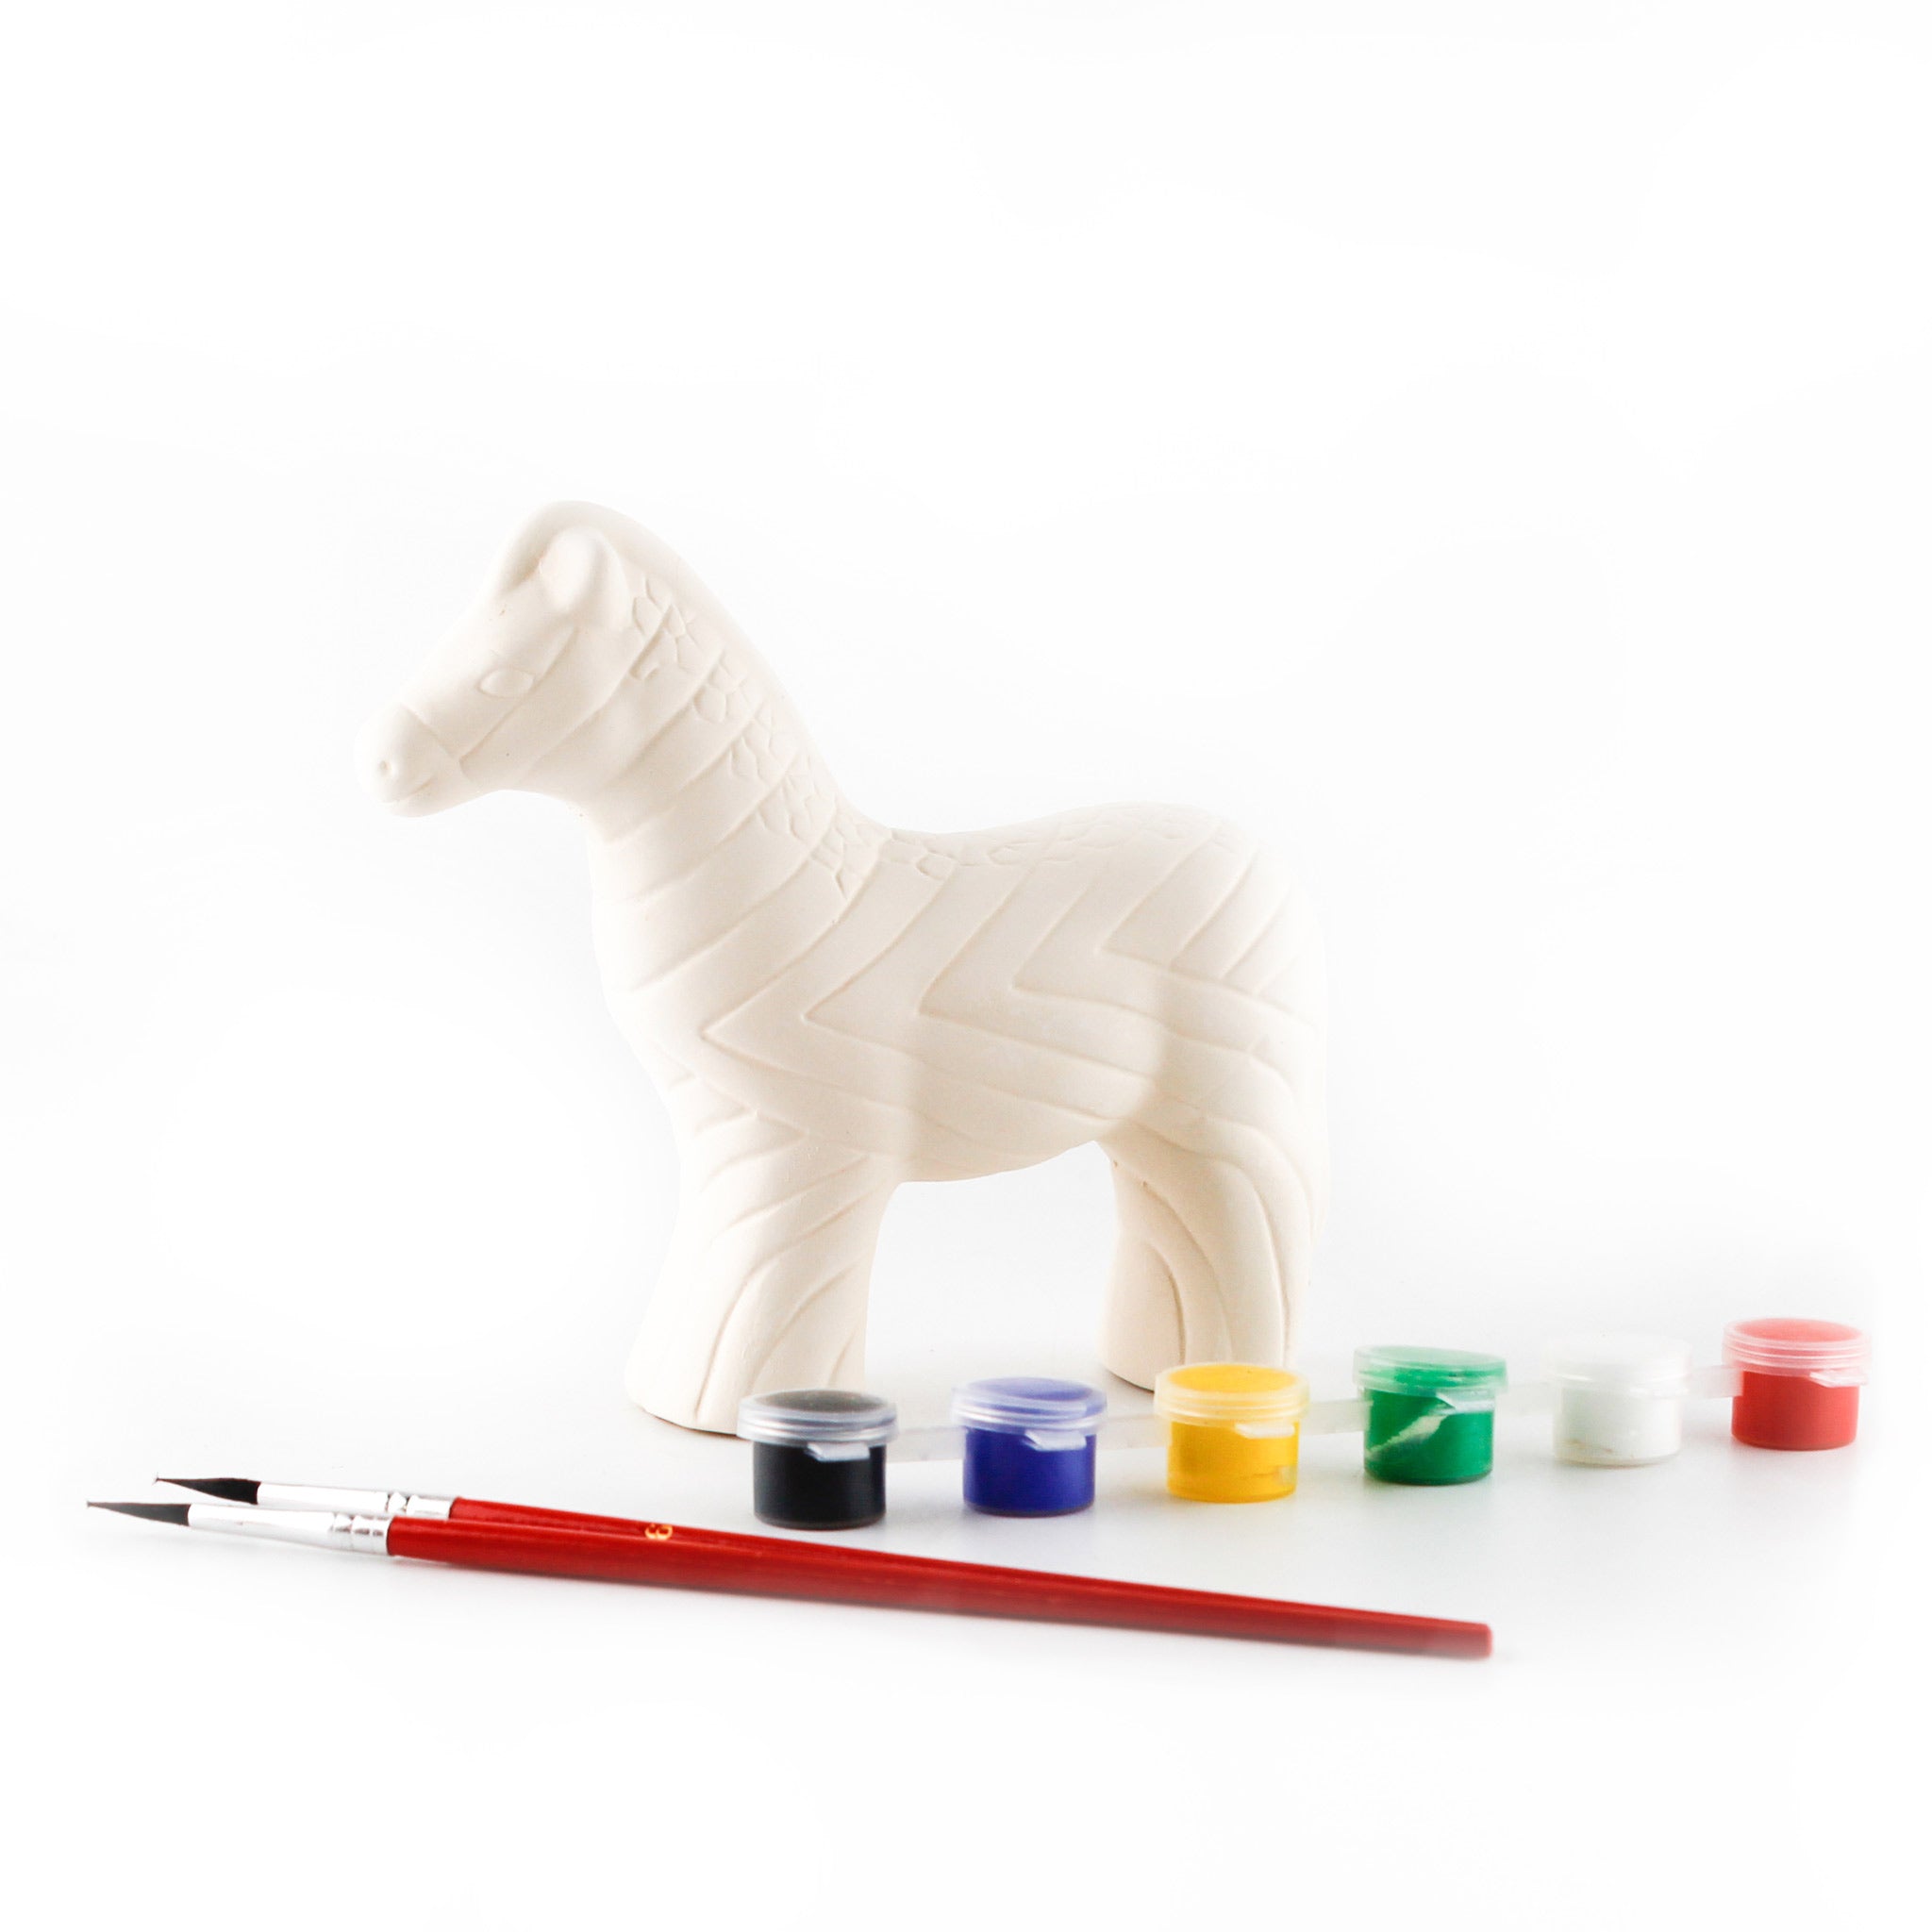 Paint your own zebra kit with paints